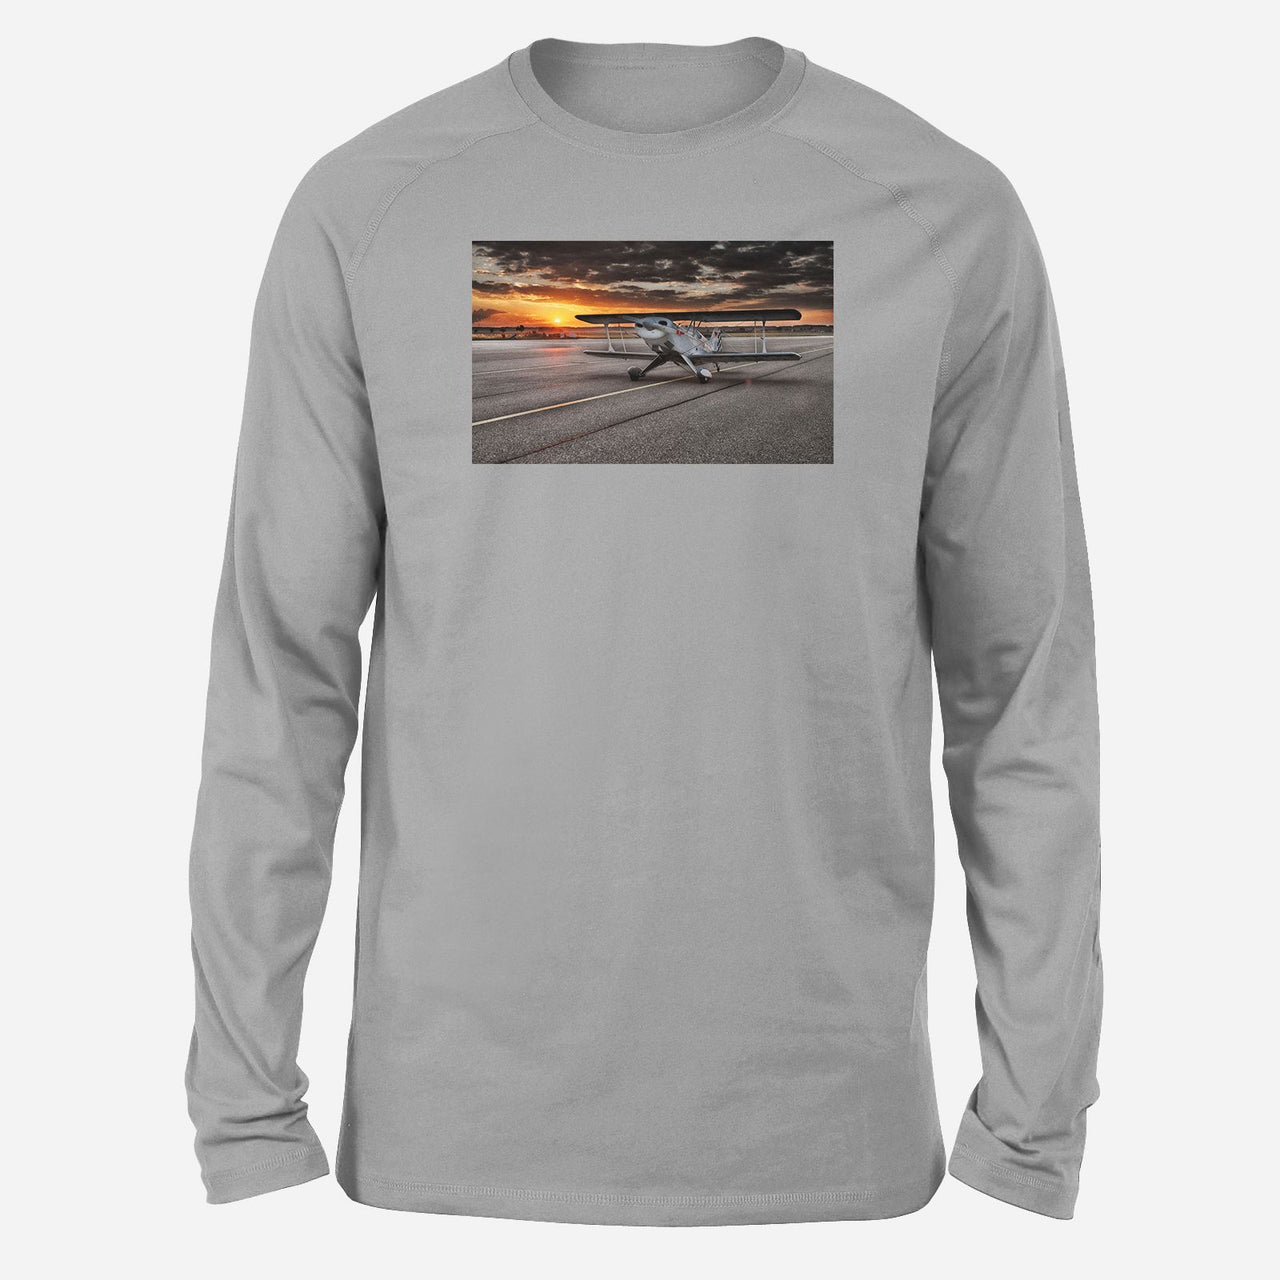 Beautiful Show Airplane Designed Long-Sleeve T-Shirts